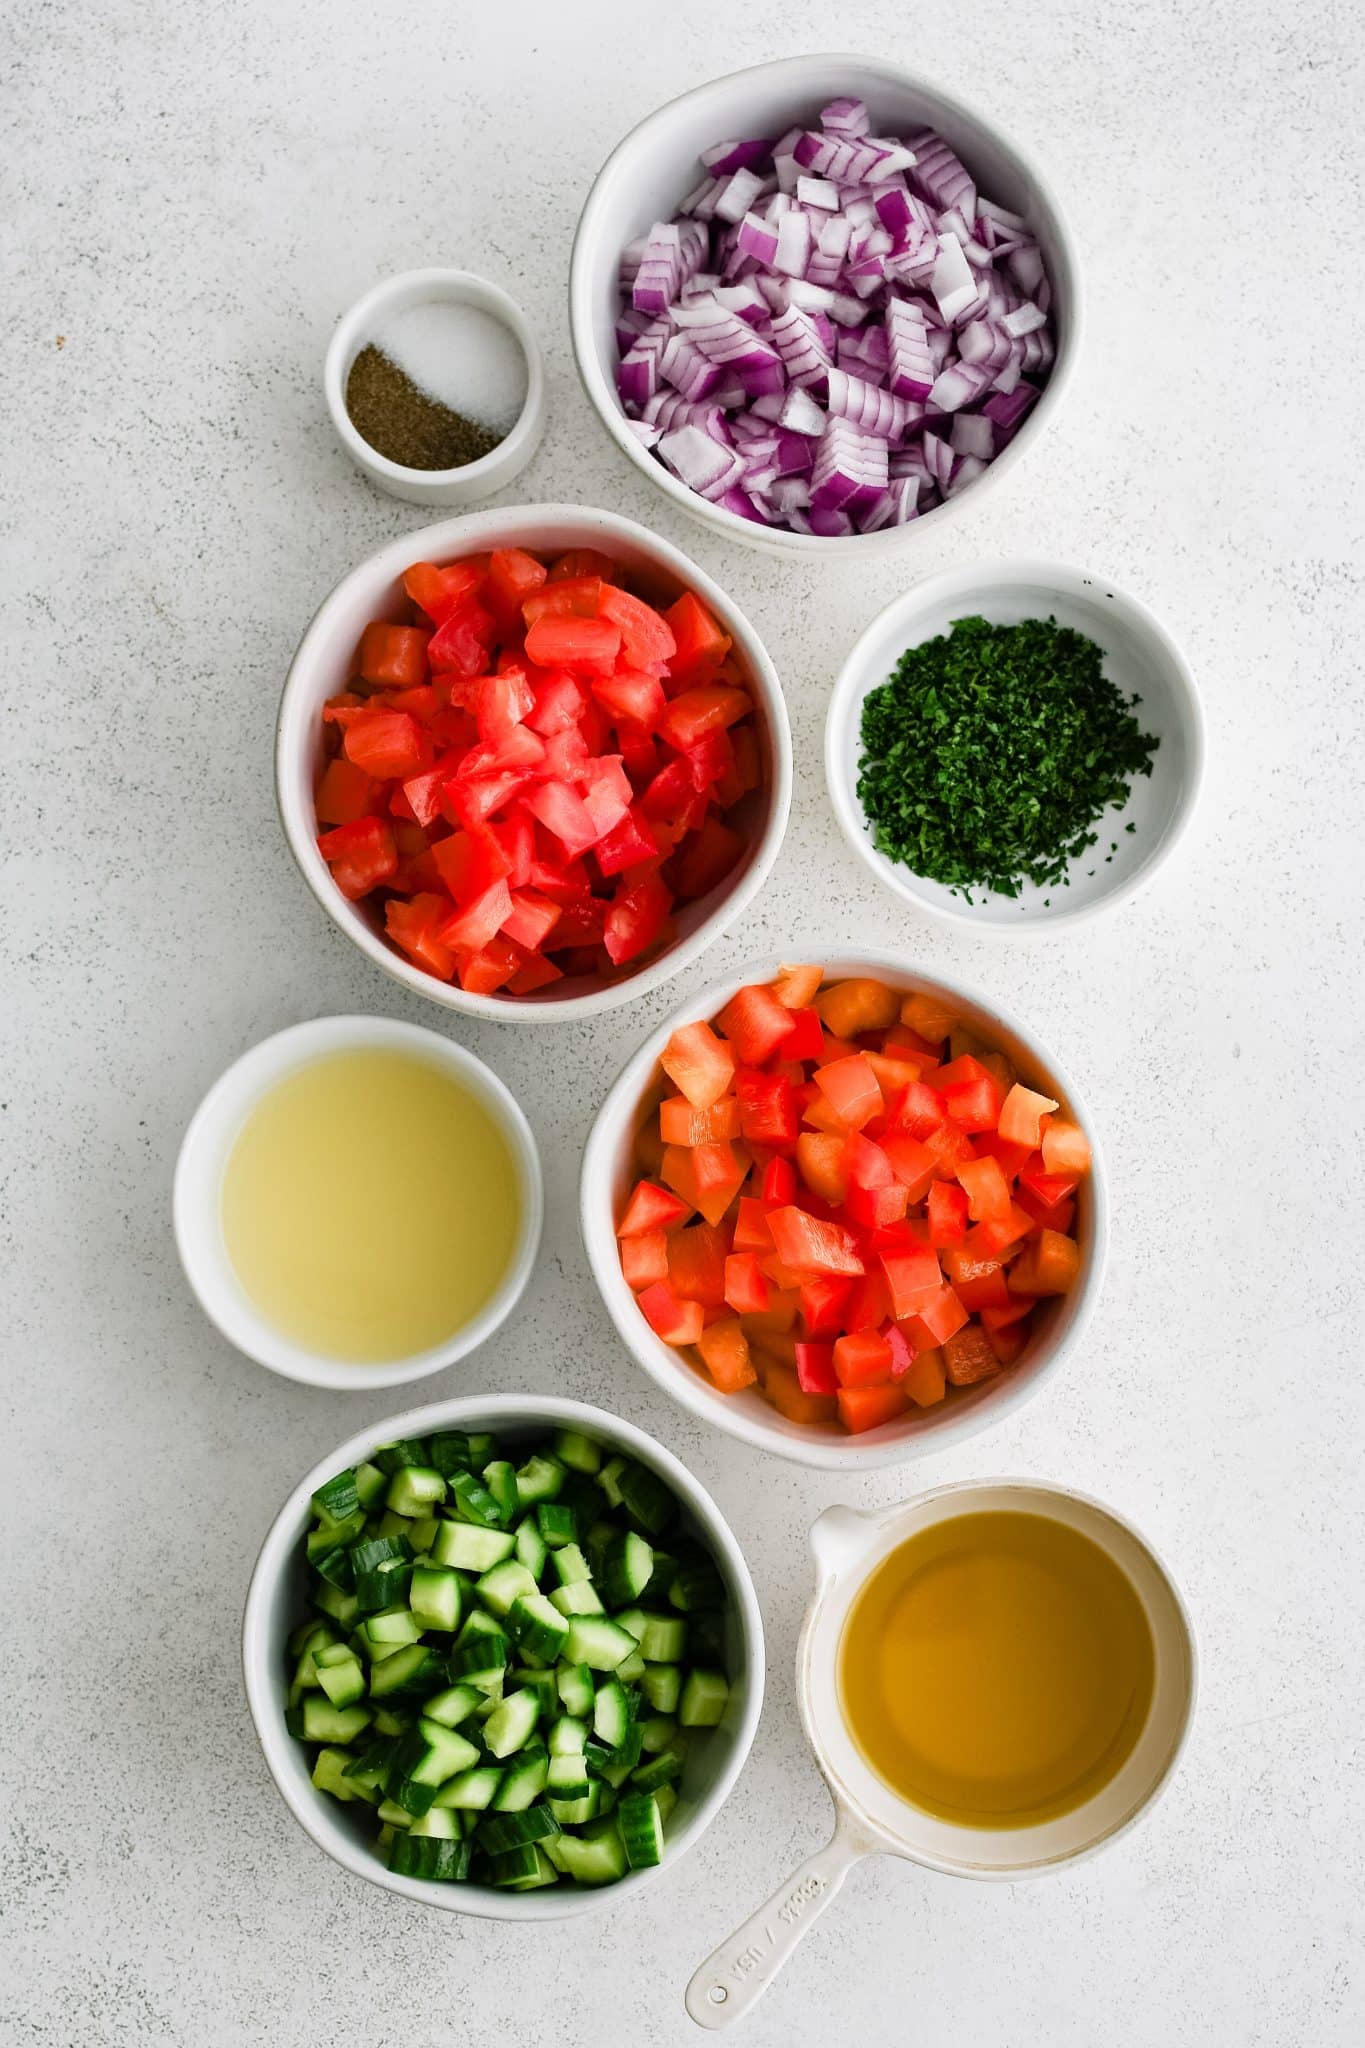 Ingredients for Israeli Salad in individual measuring cups and ramekins.